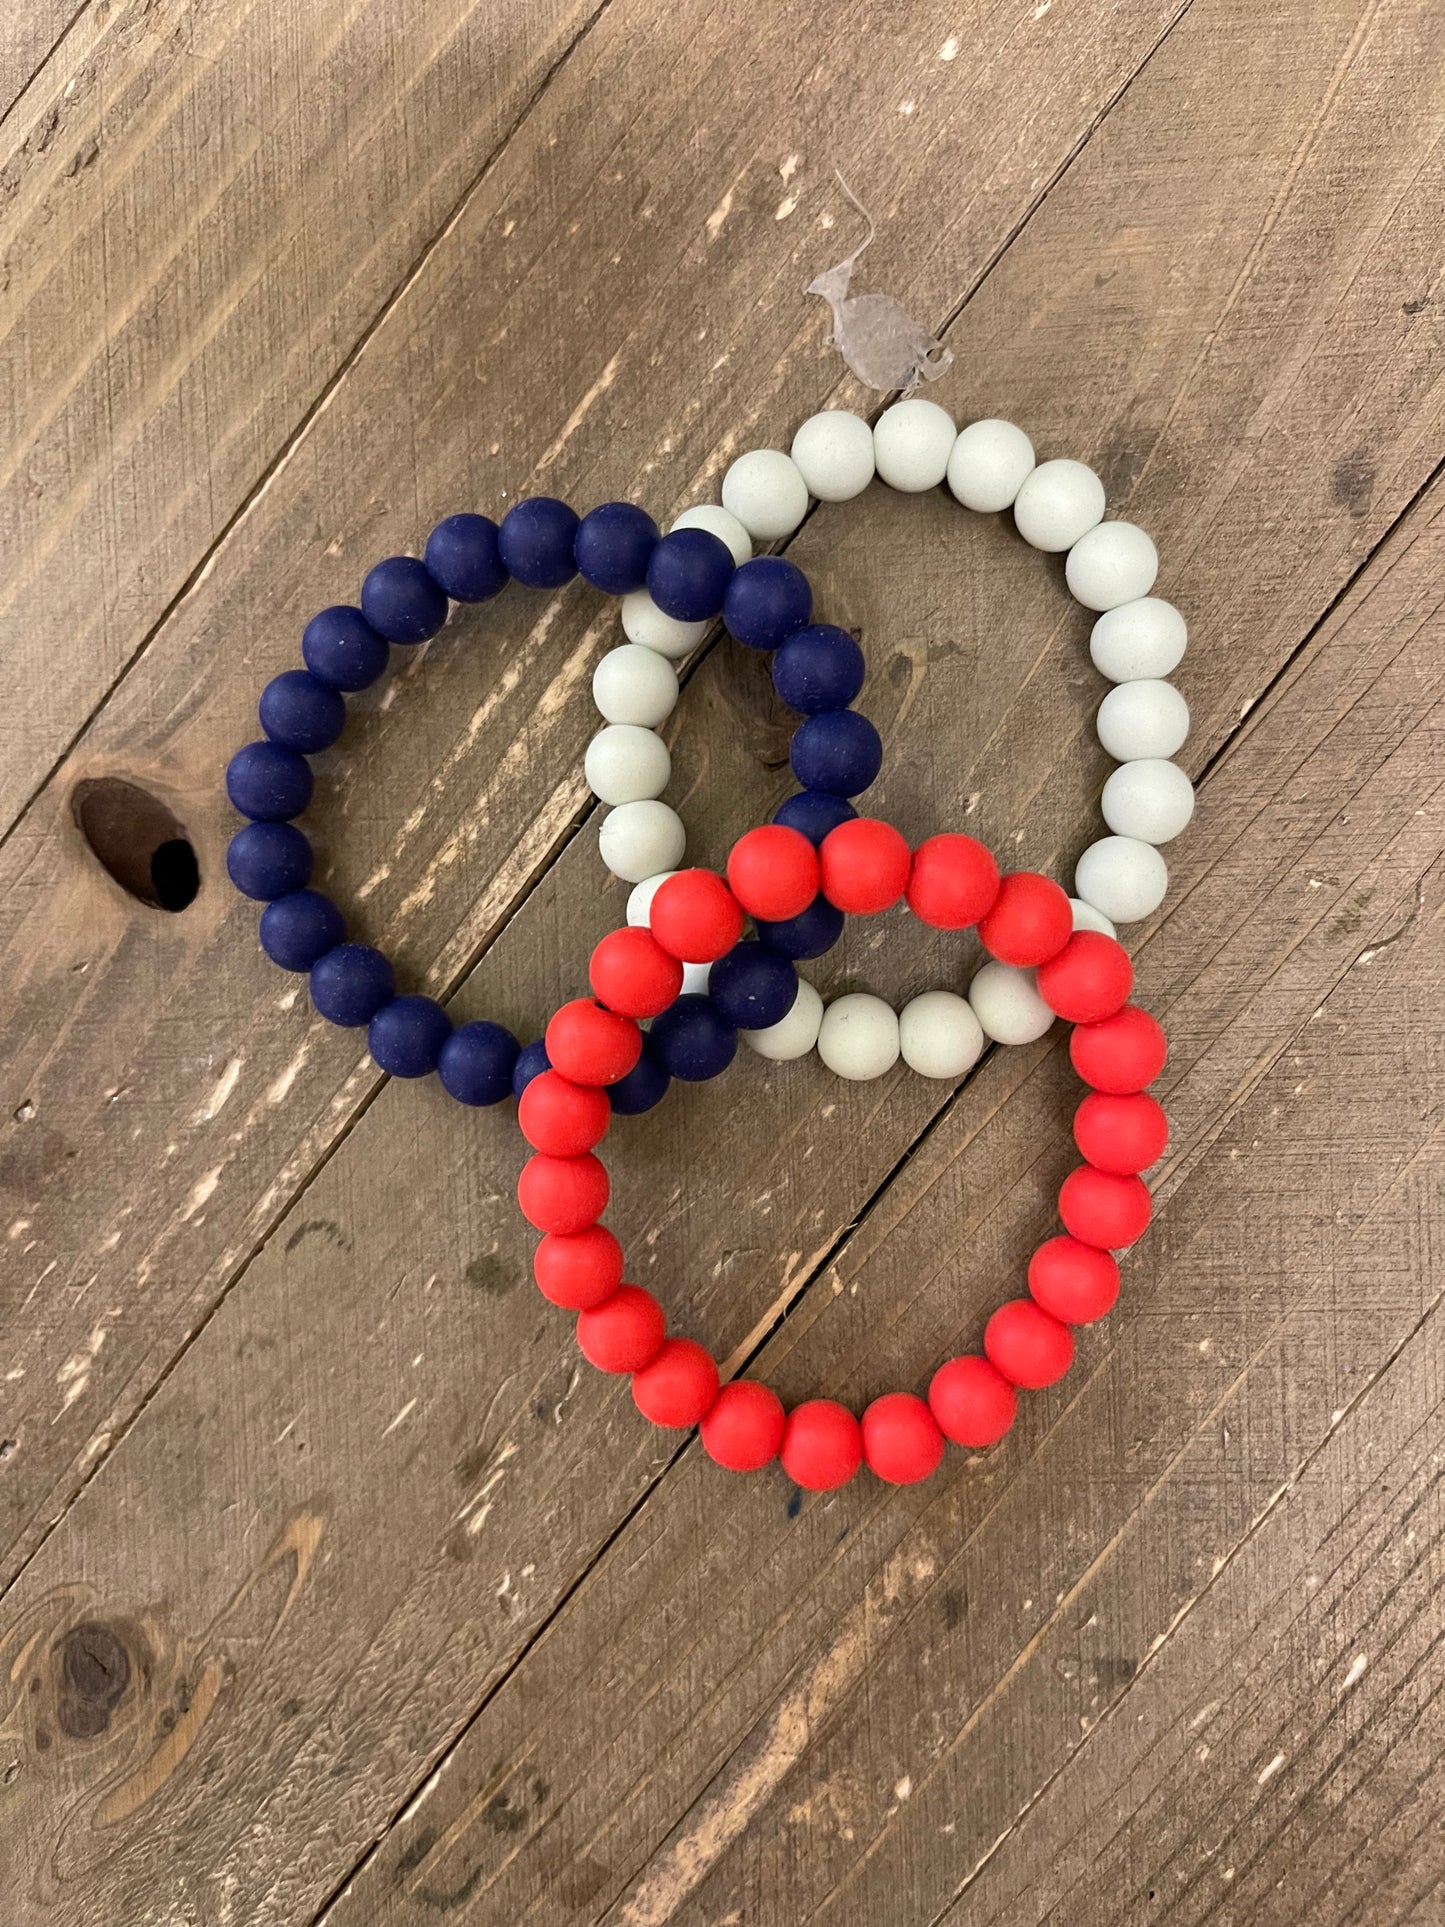 All American-Red, White & Blue Beaded Elastic/Stretch Bracelet